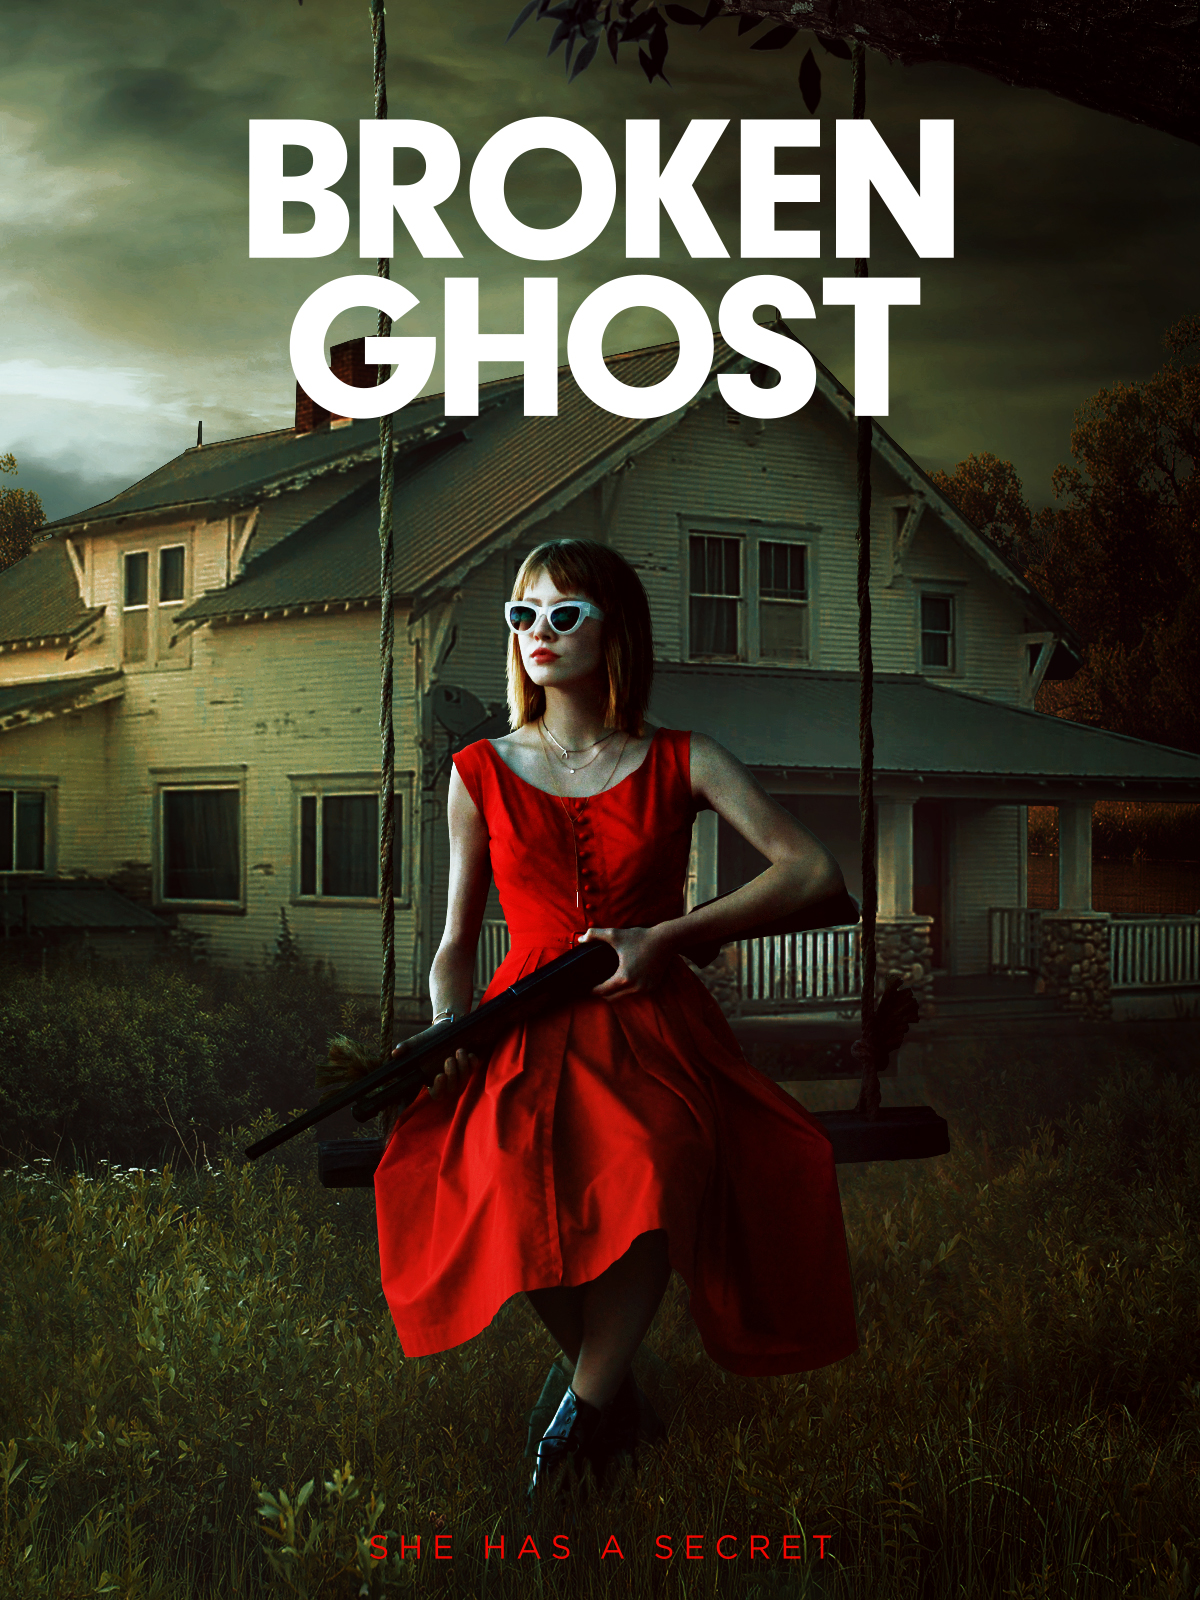 Nonton film Broken Ghost layarkaca21 indoxx1 ganool online streaming terbaru